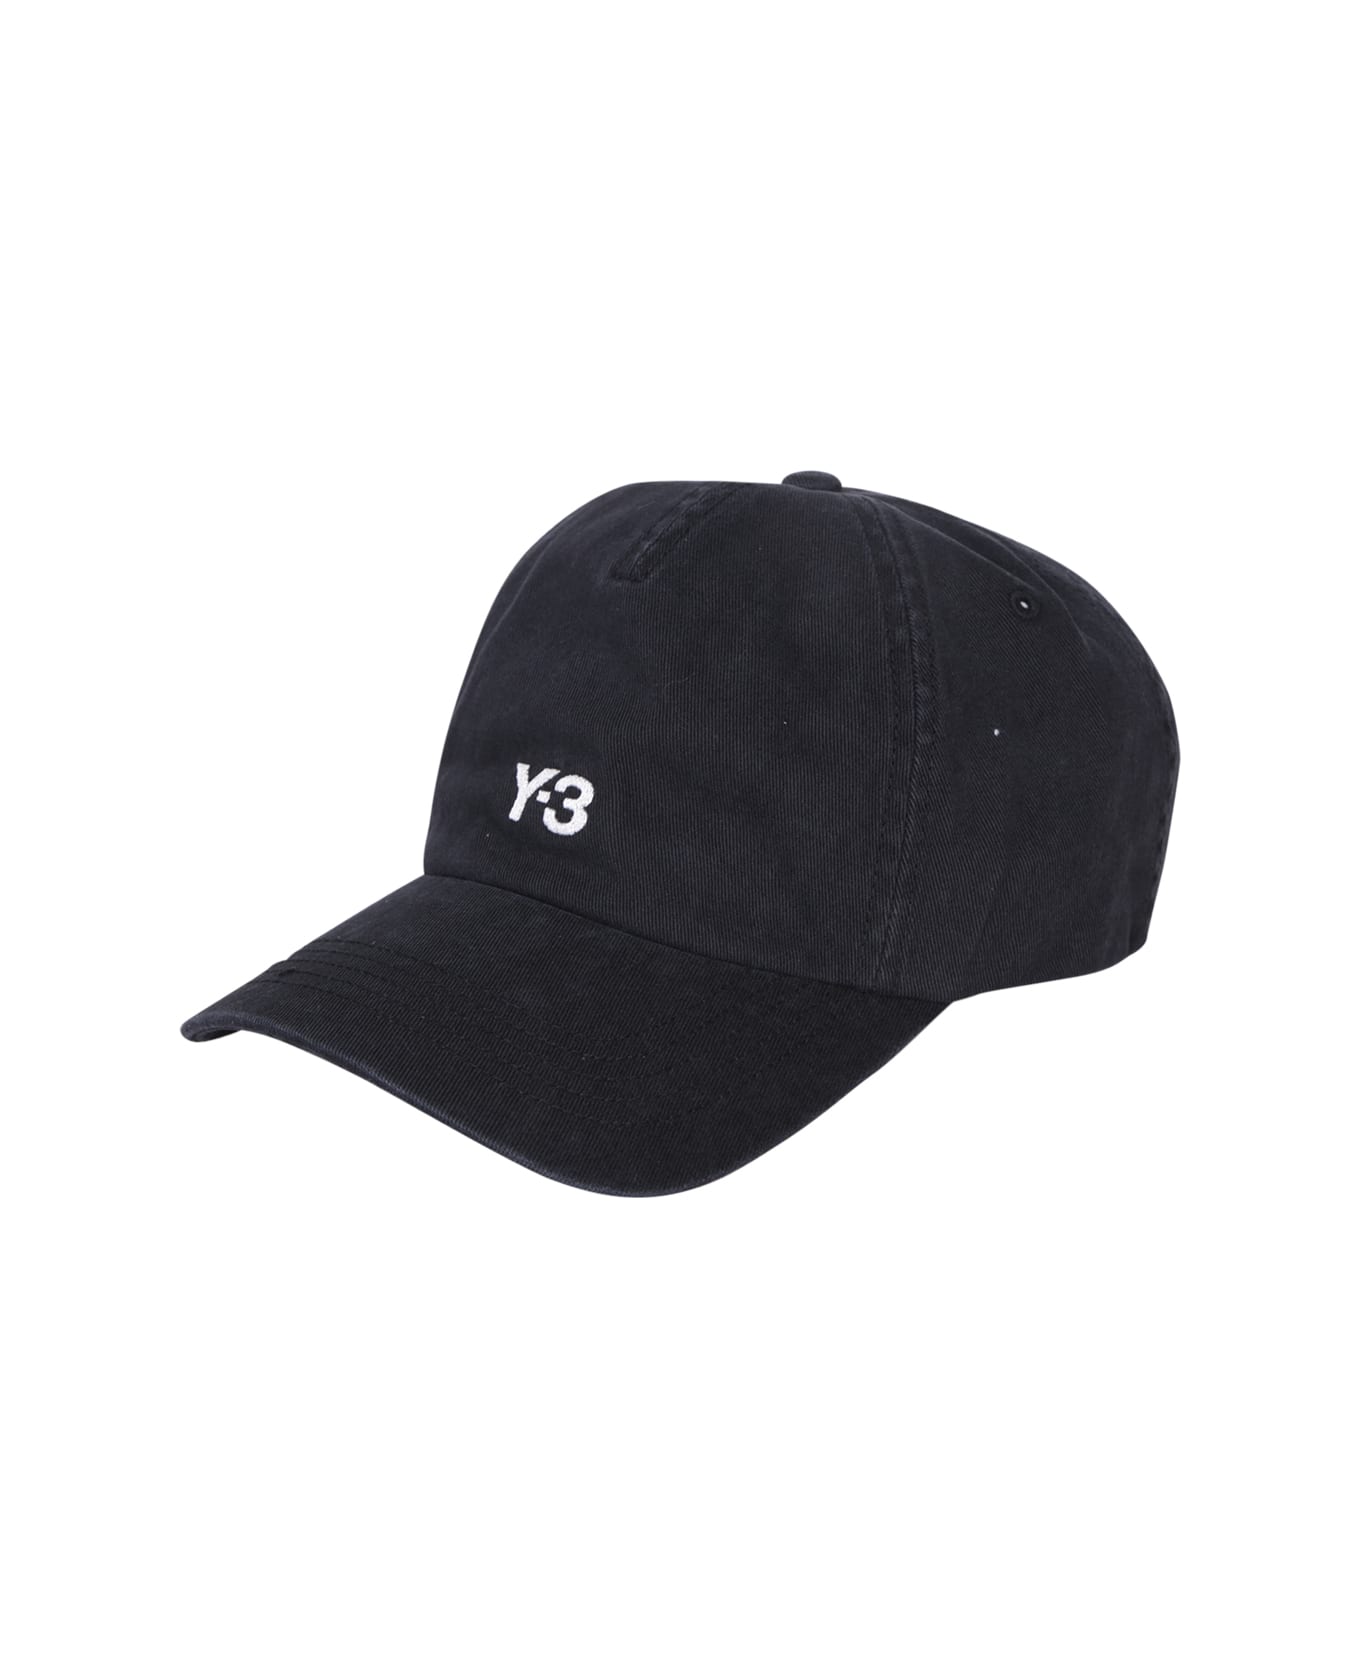 Y-3 Logo Embroidered Baseball Cap Hat - Black